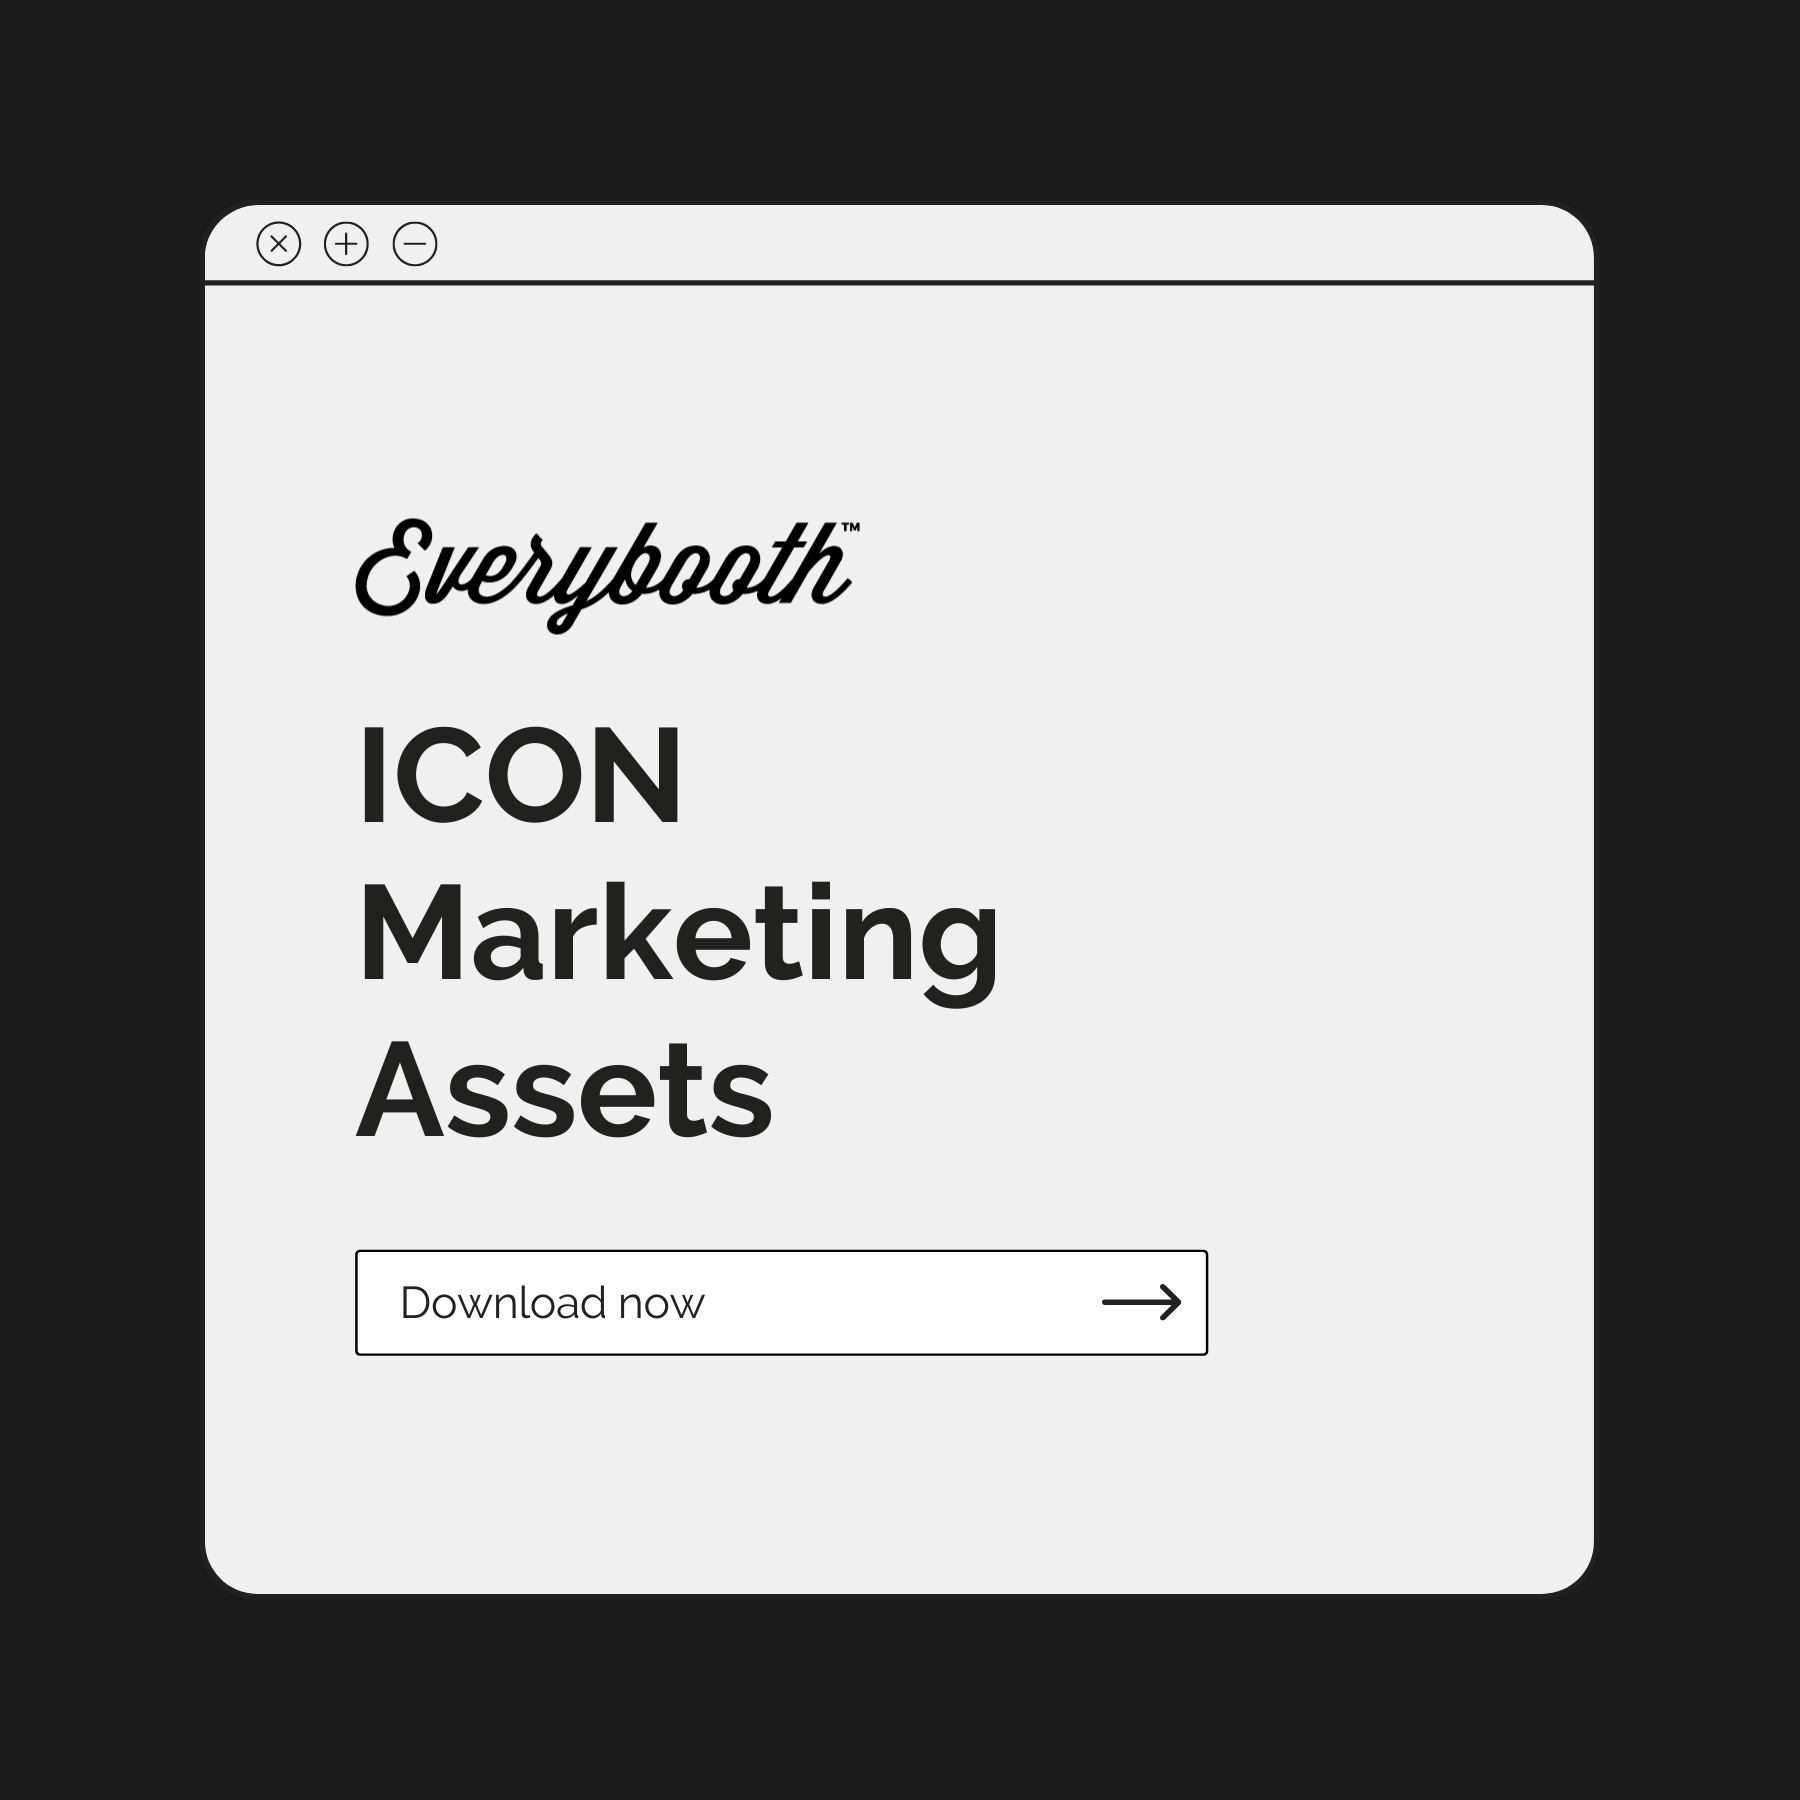 ICON Marketing Assets